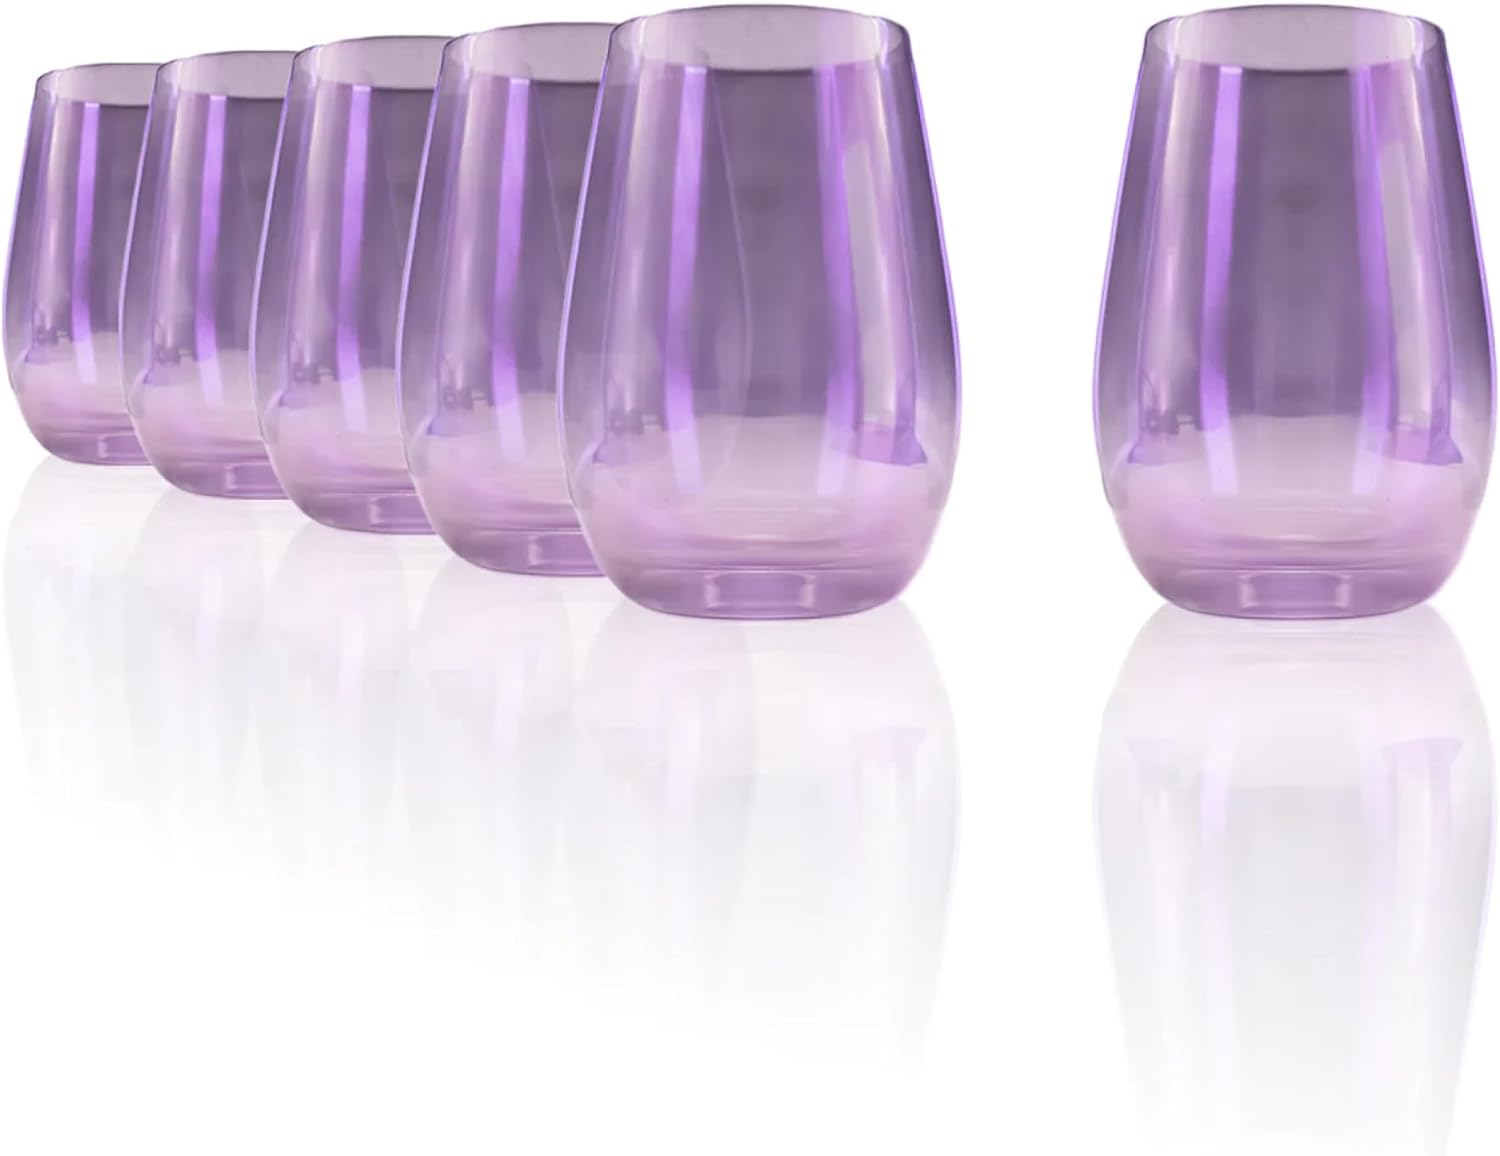 Stölzle Lausitz Long Drink Cups Mirror Purple / Set of 6 Drinking Glasses / Cocktail Glasses / High-Quality Long Drink Glasses Set in Mirrored Look / Gin Glasses / Highball Glasses